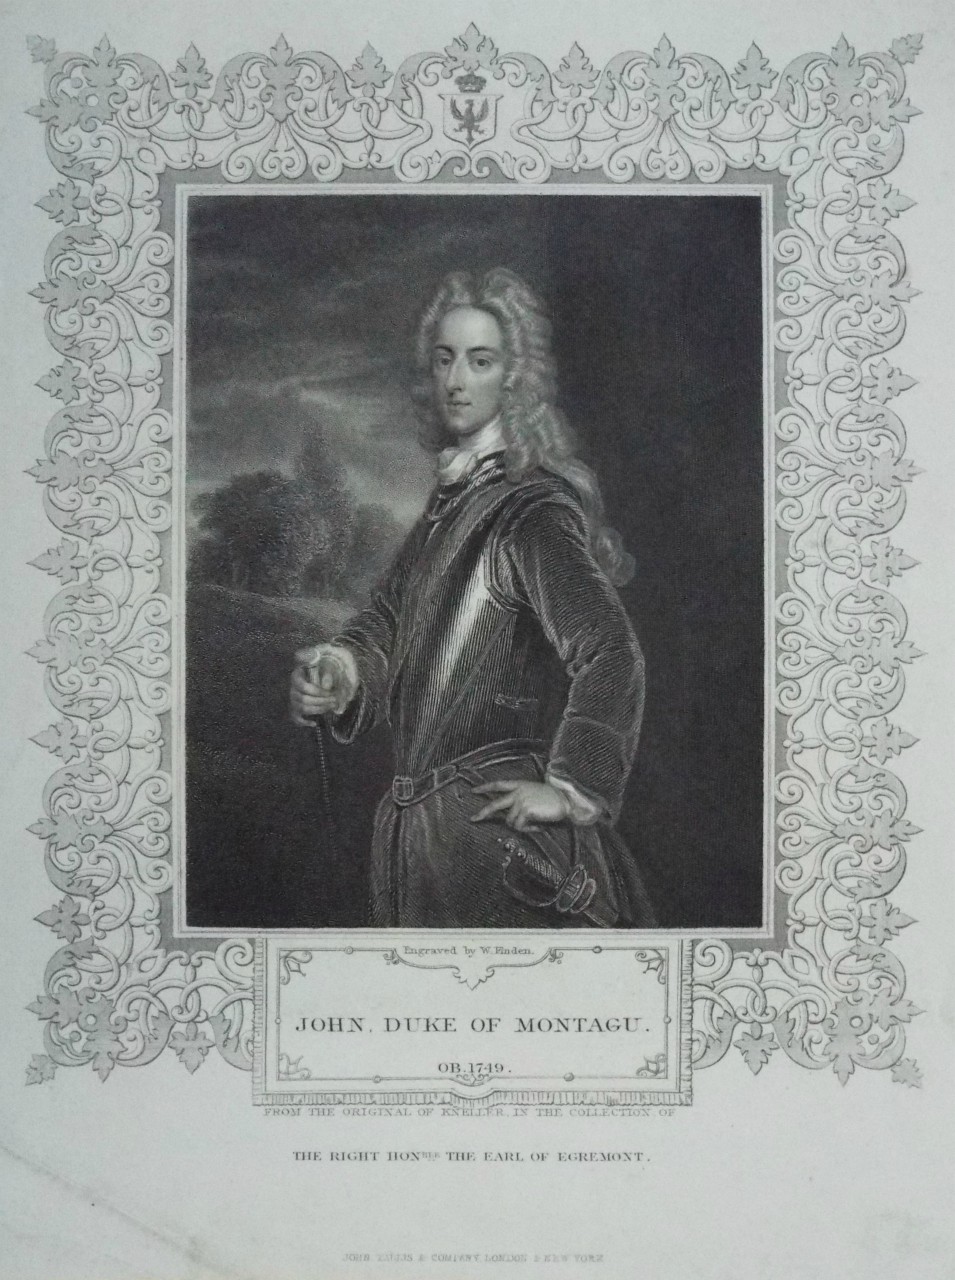 Print - John, Duke of Montagu. OB. 1749. The Right Honble. the Earl of Egremont. - Finden